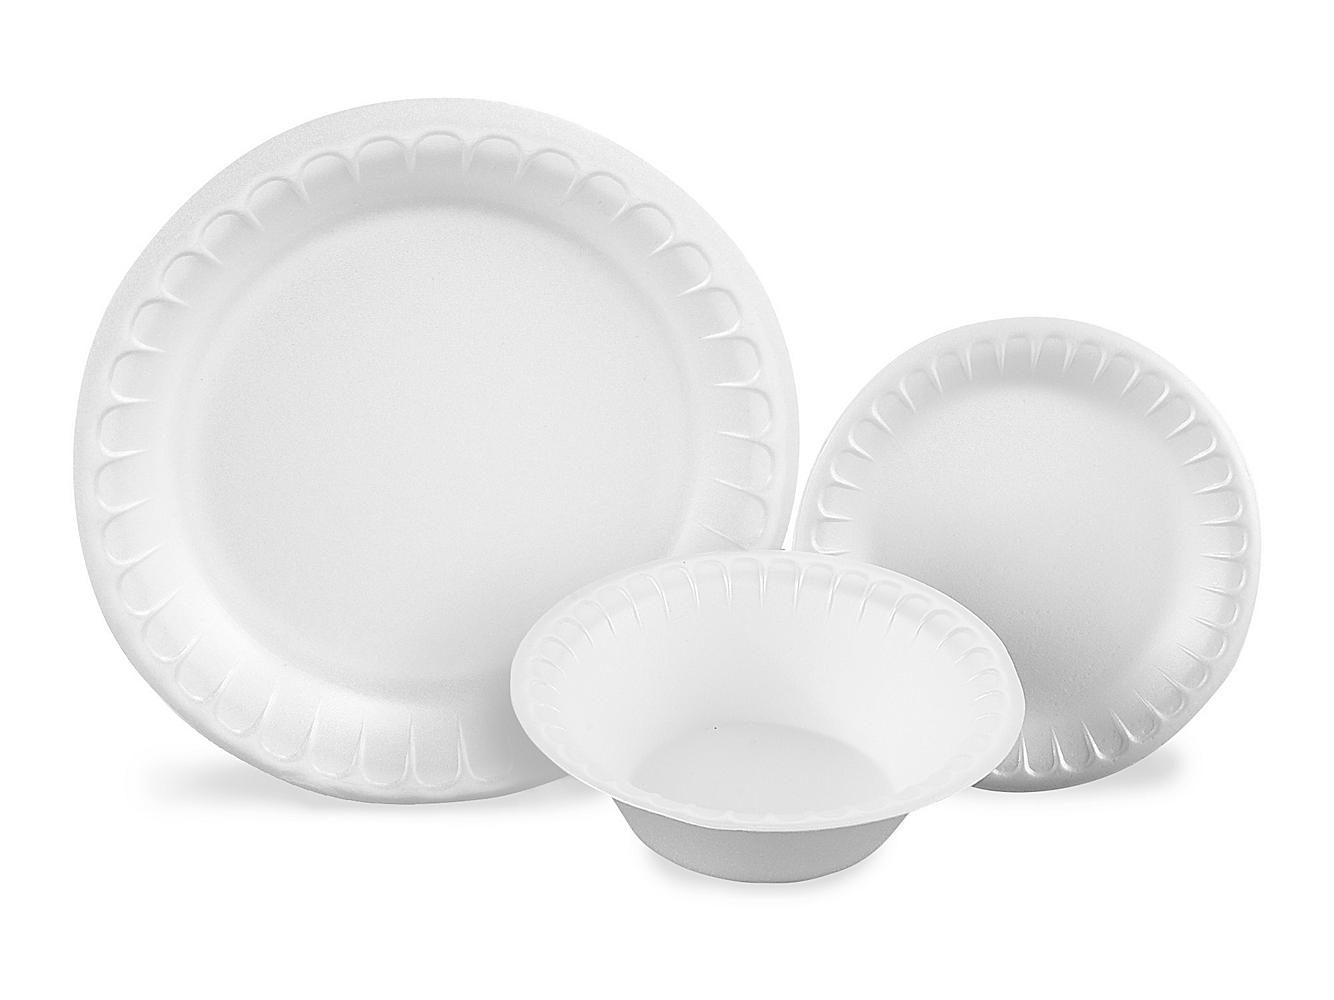 Styrofoam Plates, Styrofoam Bowls, Foam Plates in Stock - ULINE